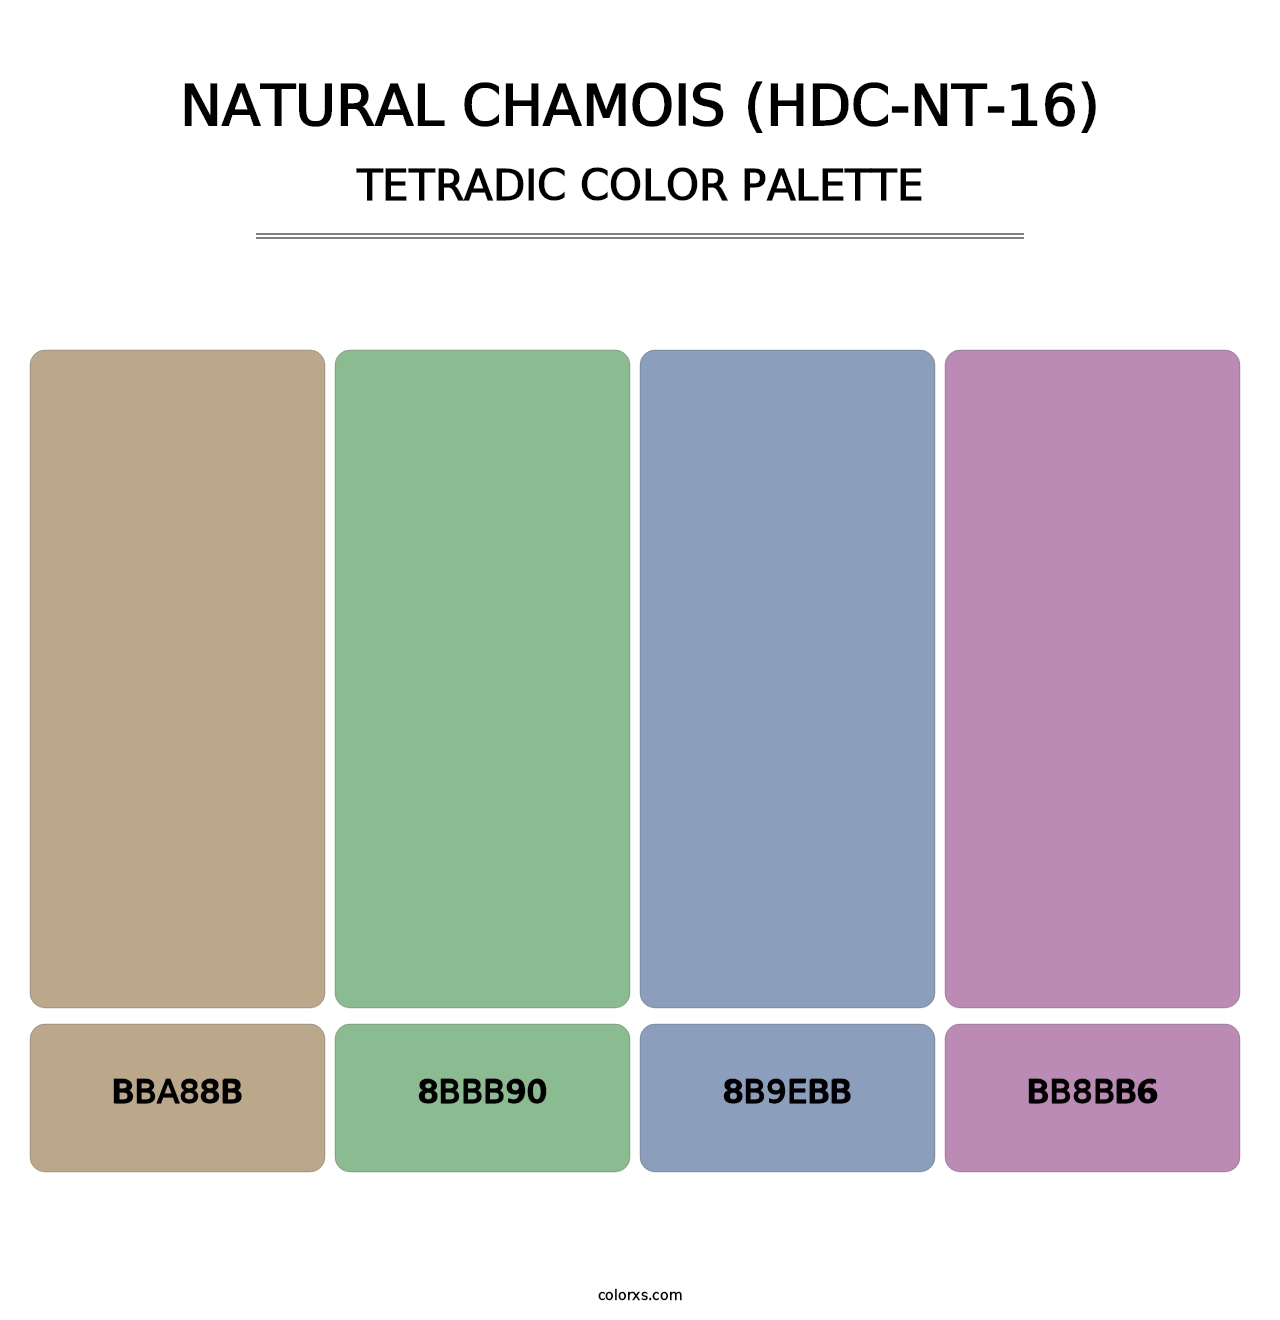 Natural Chamois (HDC-NT-16) - Tetradic Color Palette